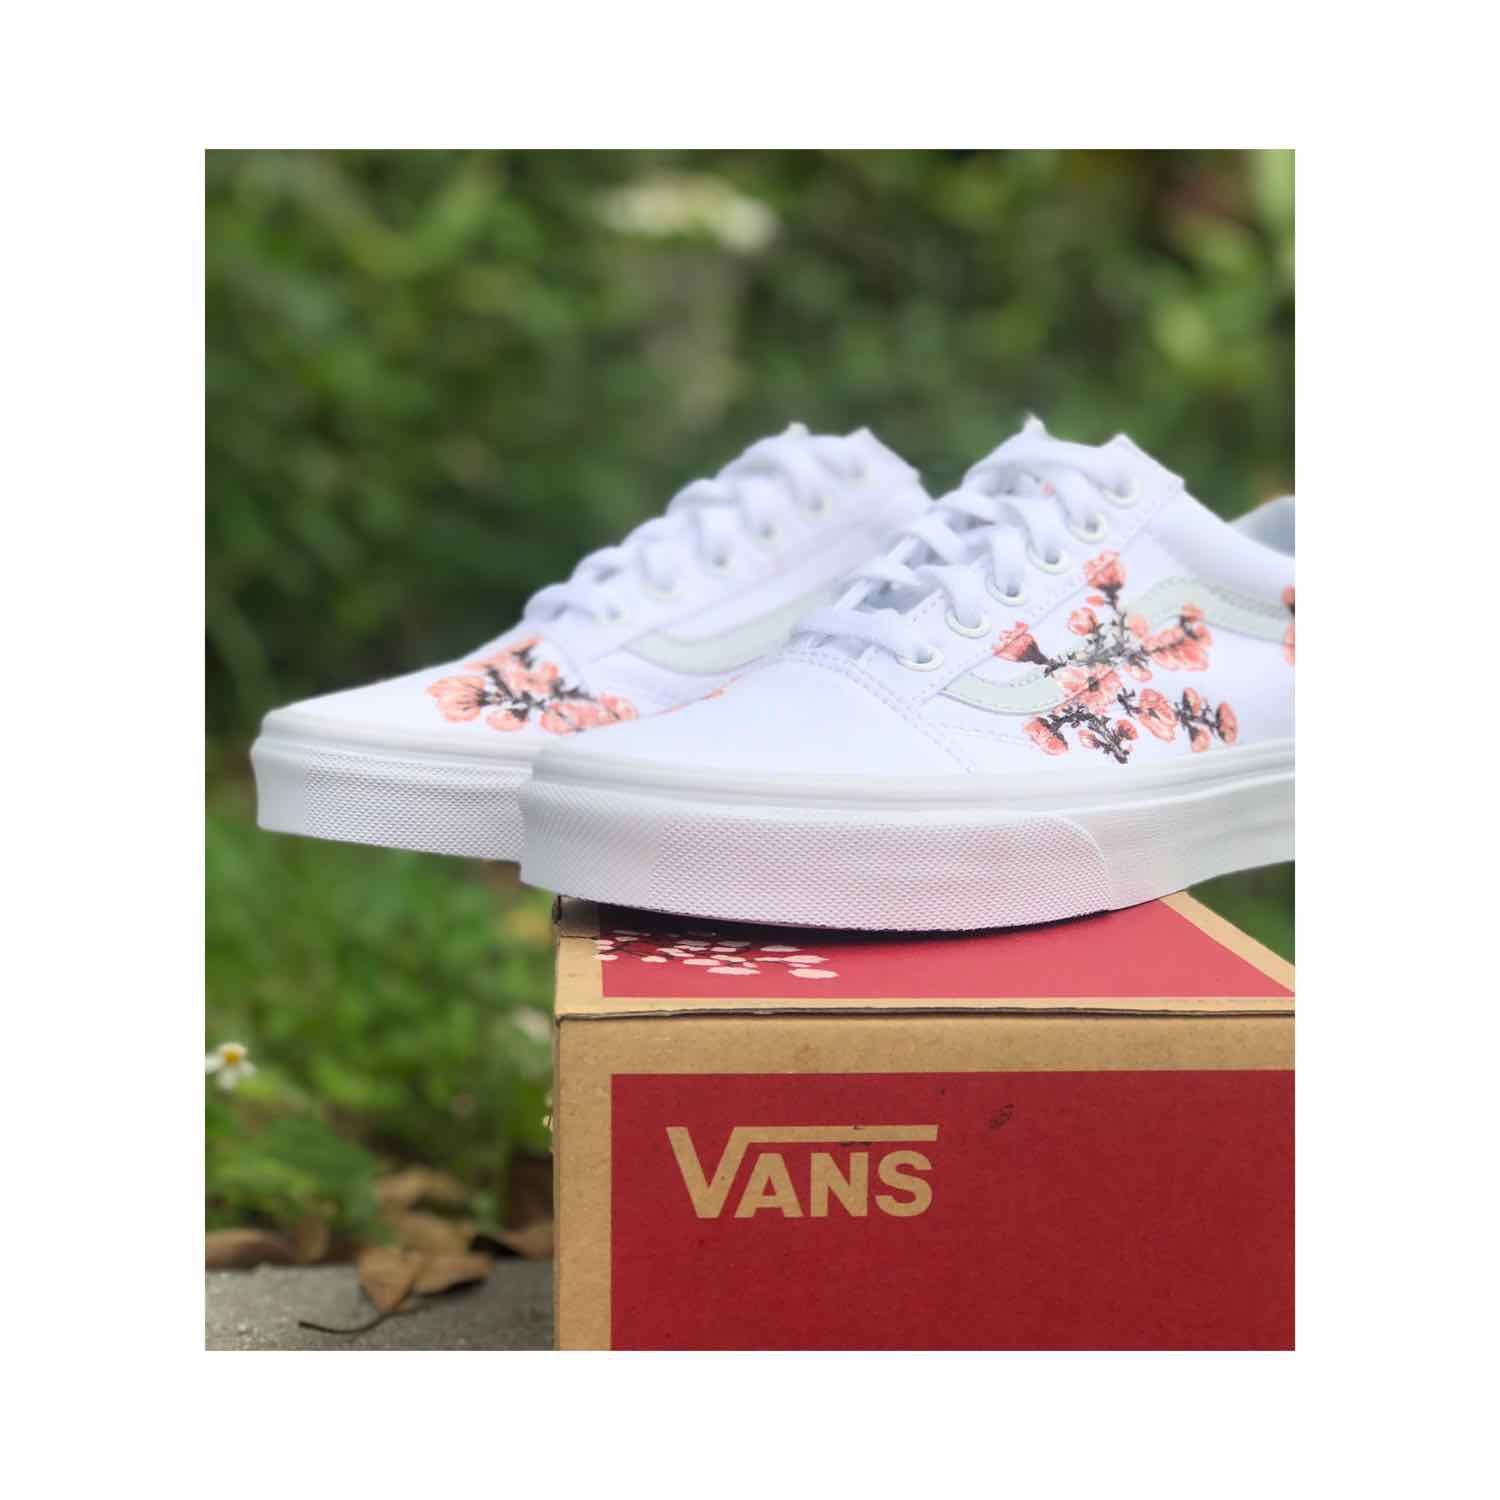 Vans “cherry blossom”